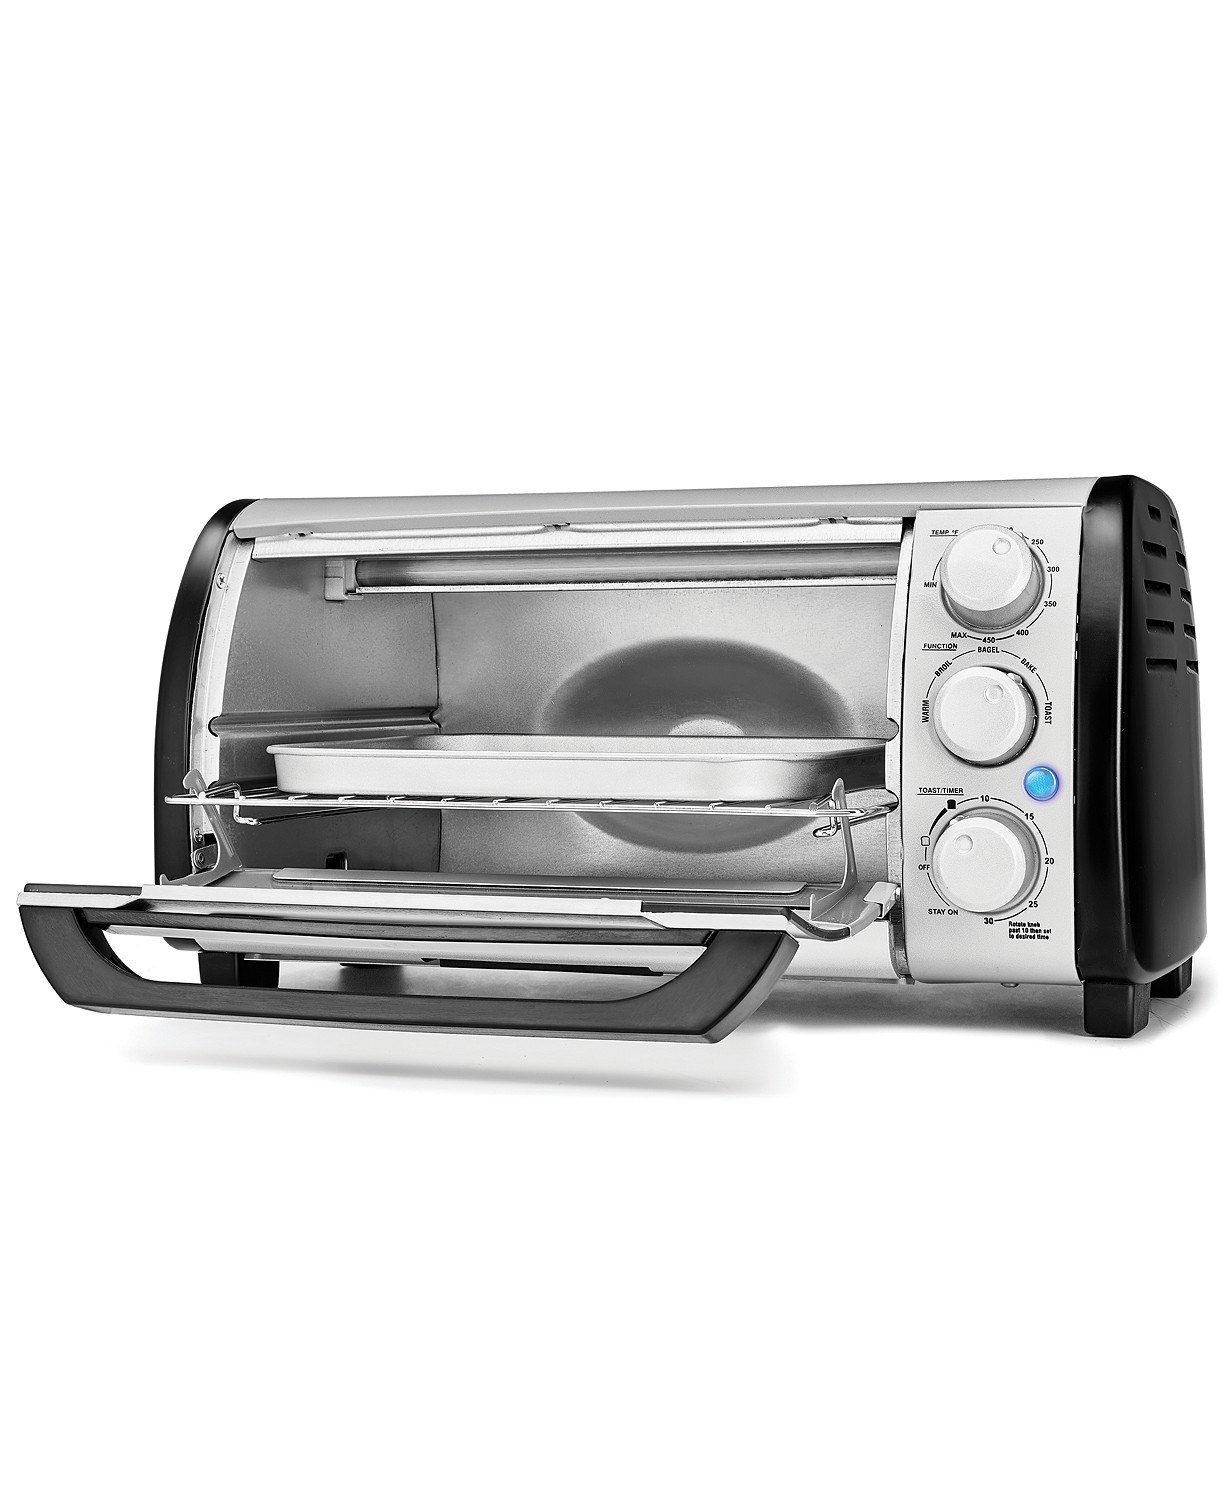 Bella Toaster Oven Rebate Form Macy S